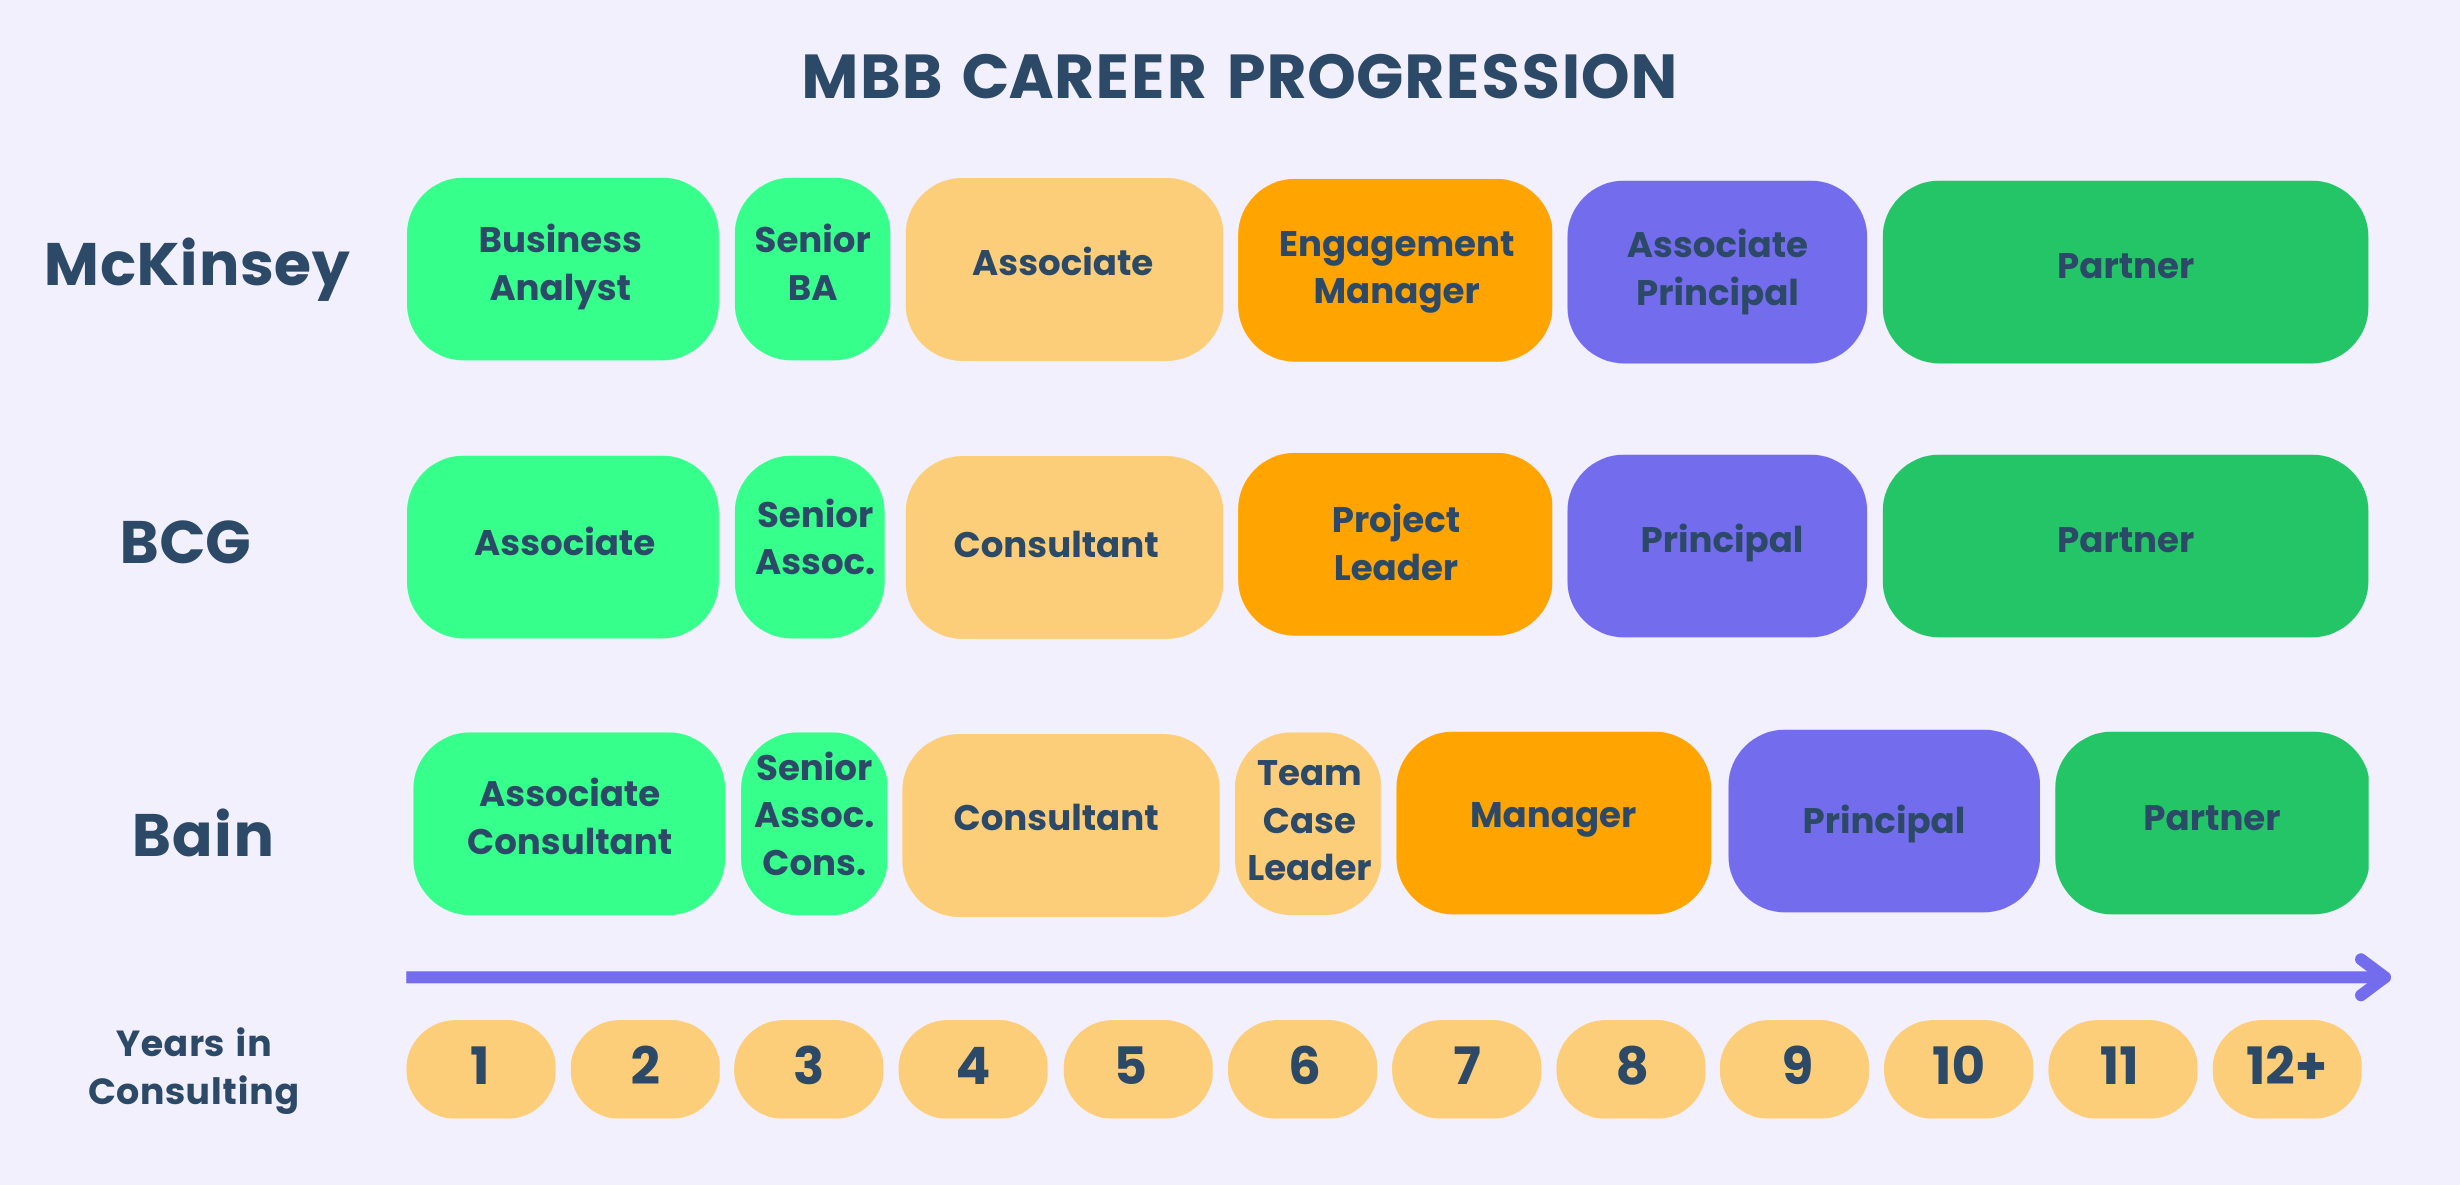 mbb-career-progression